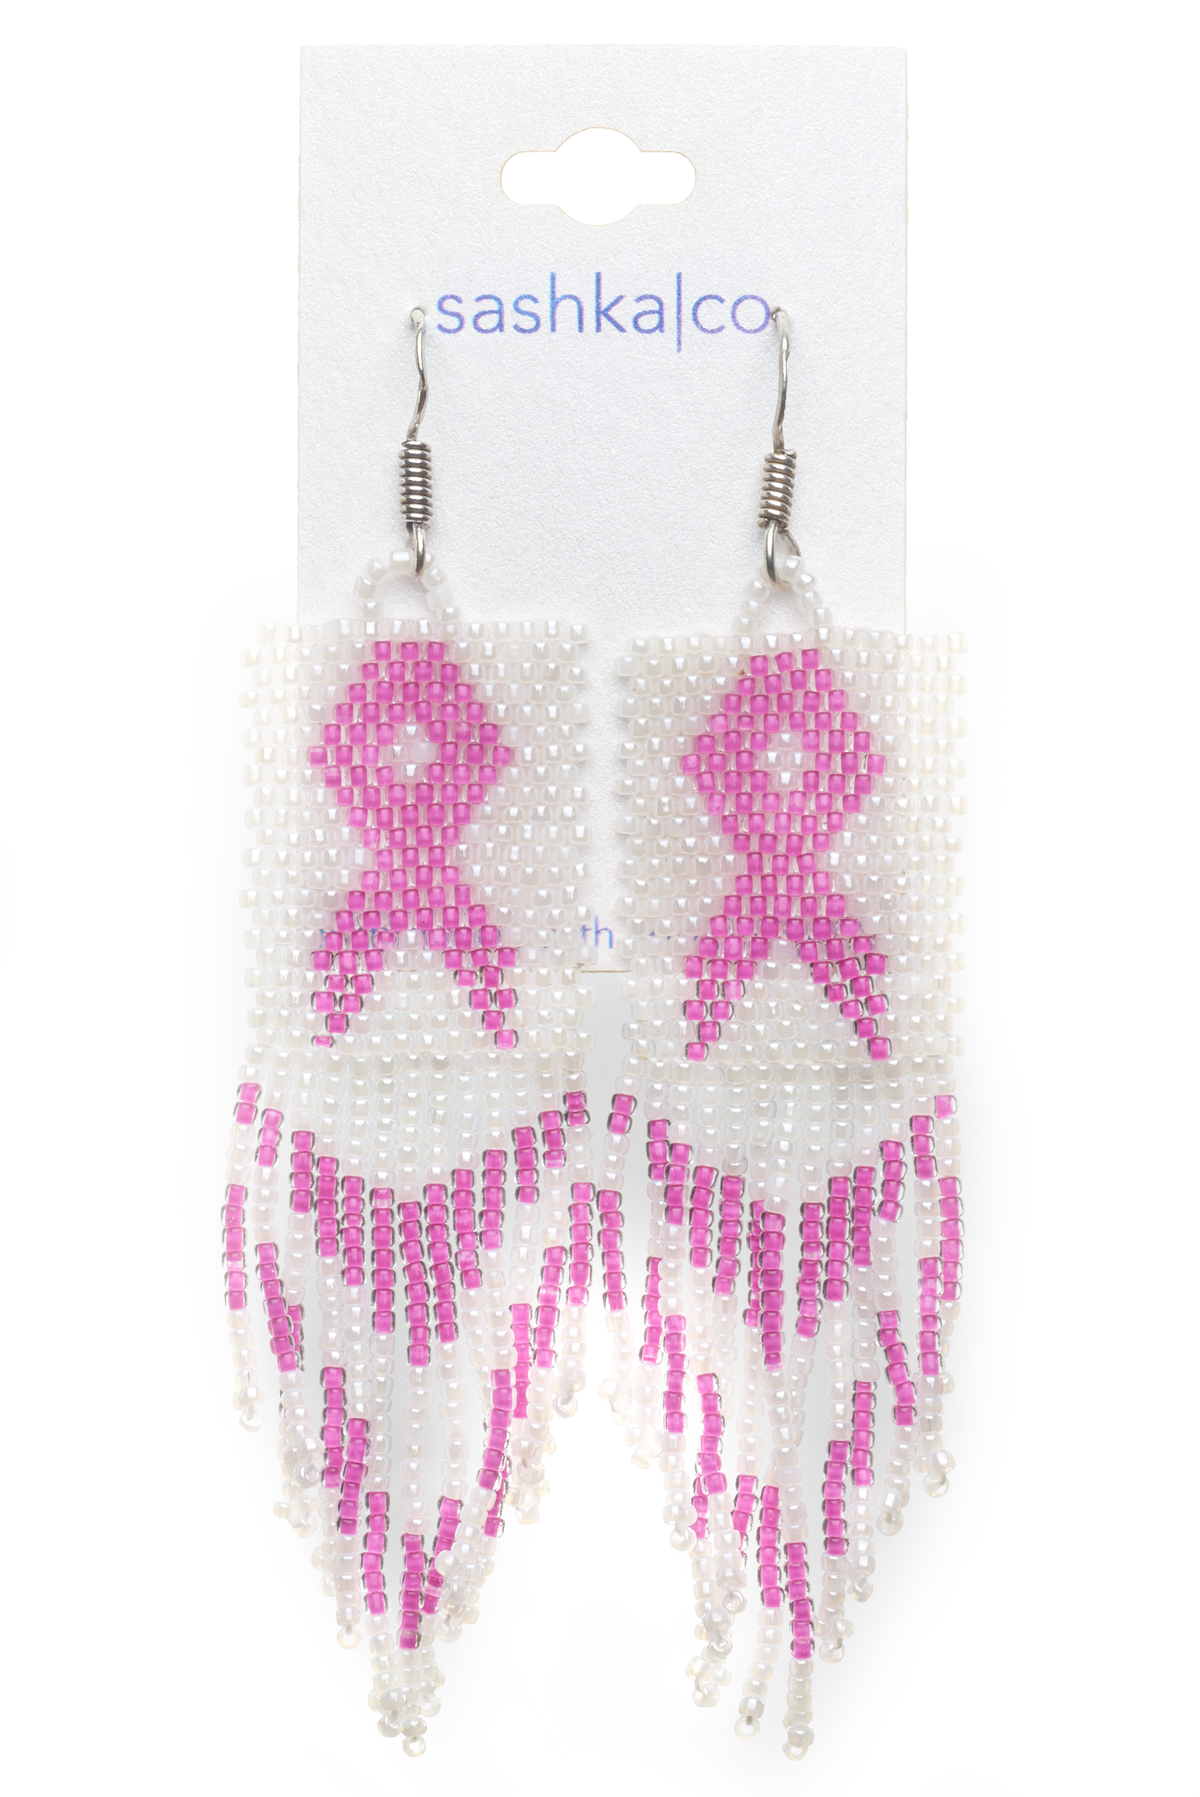 Sashka Co. Earrings Pink / White Breast Cancer Awareness Earrings